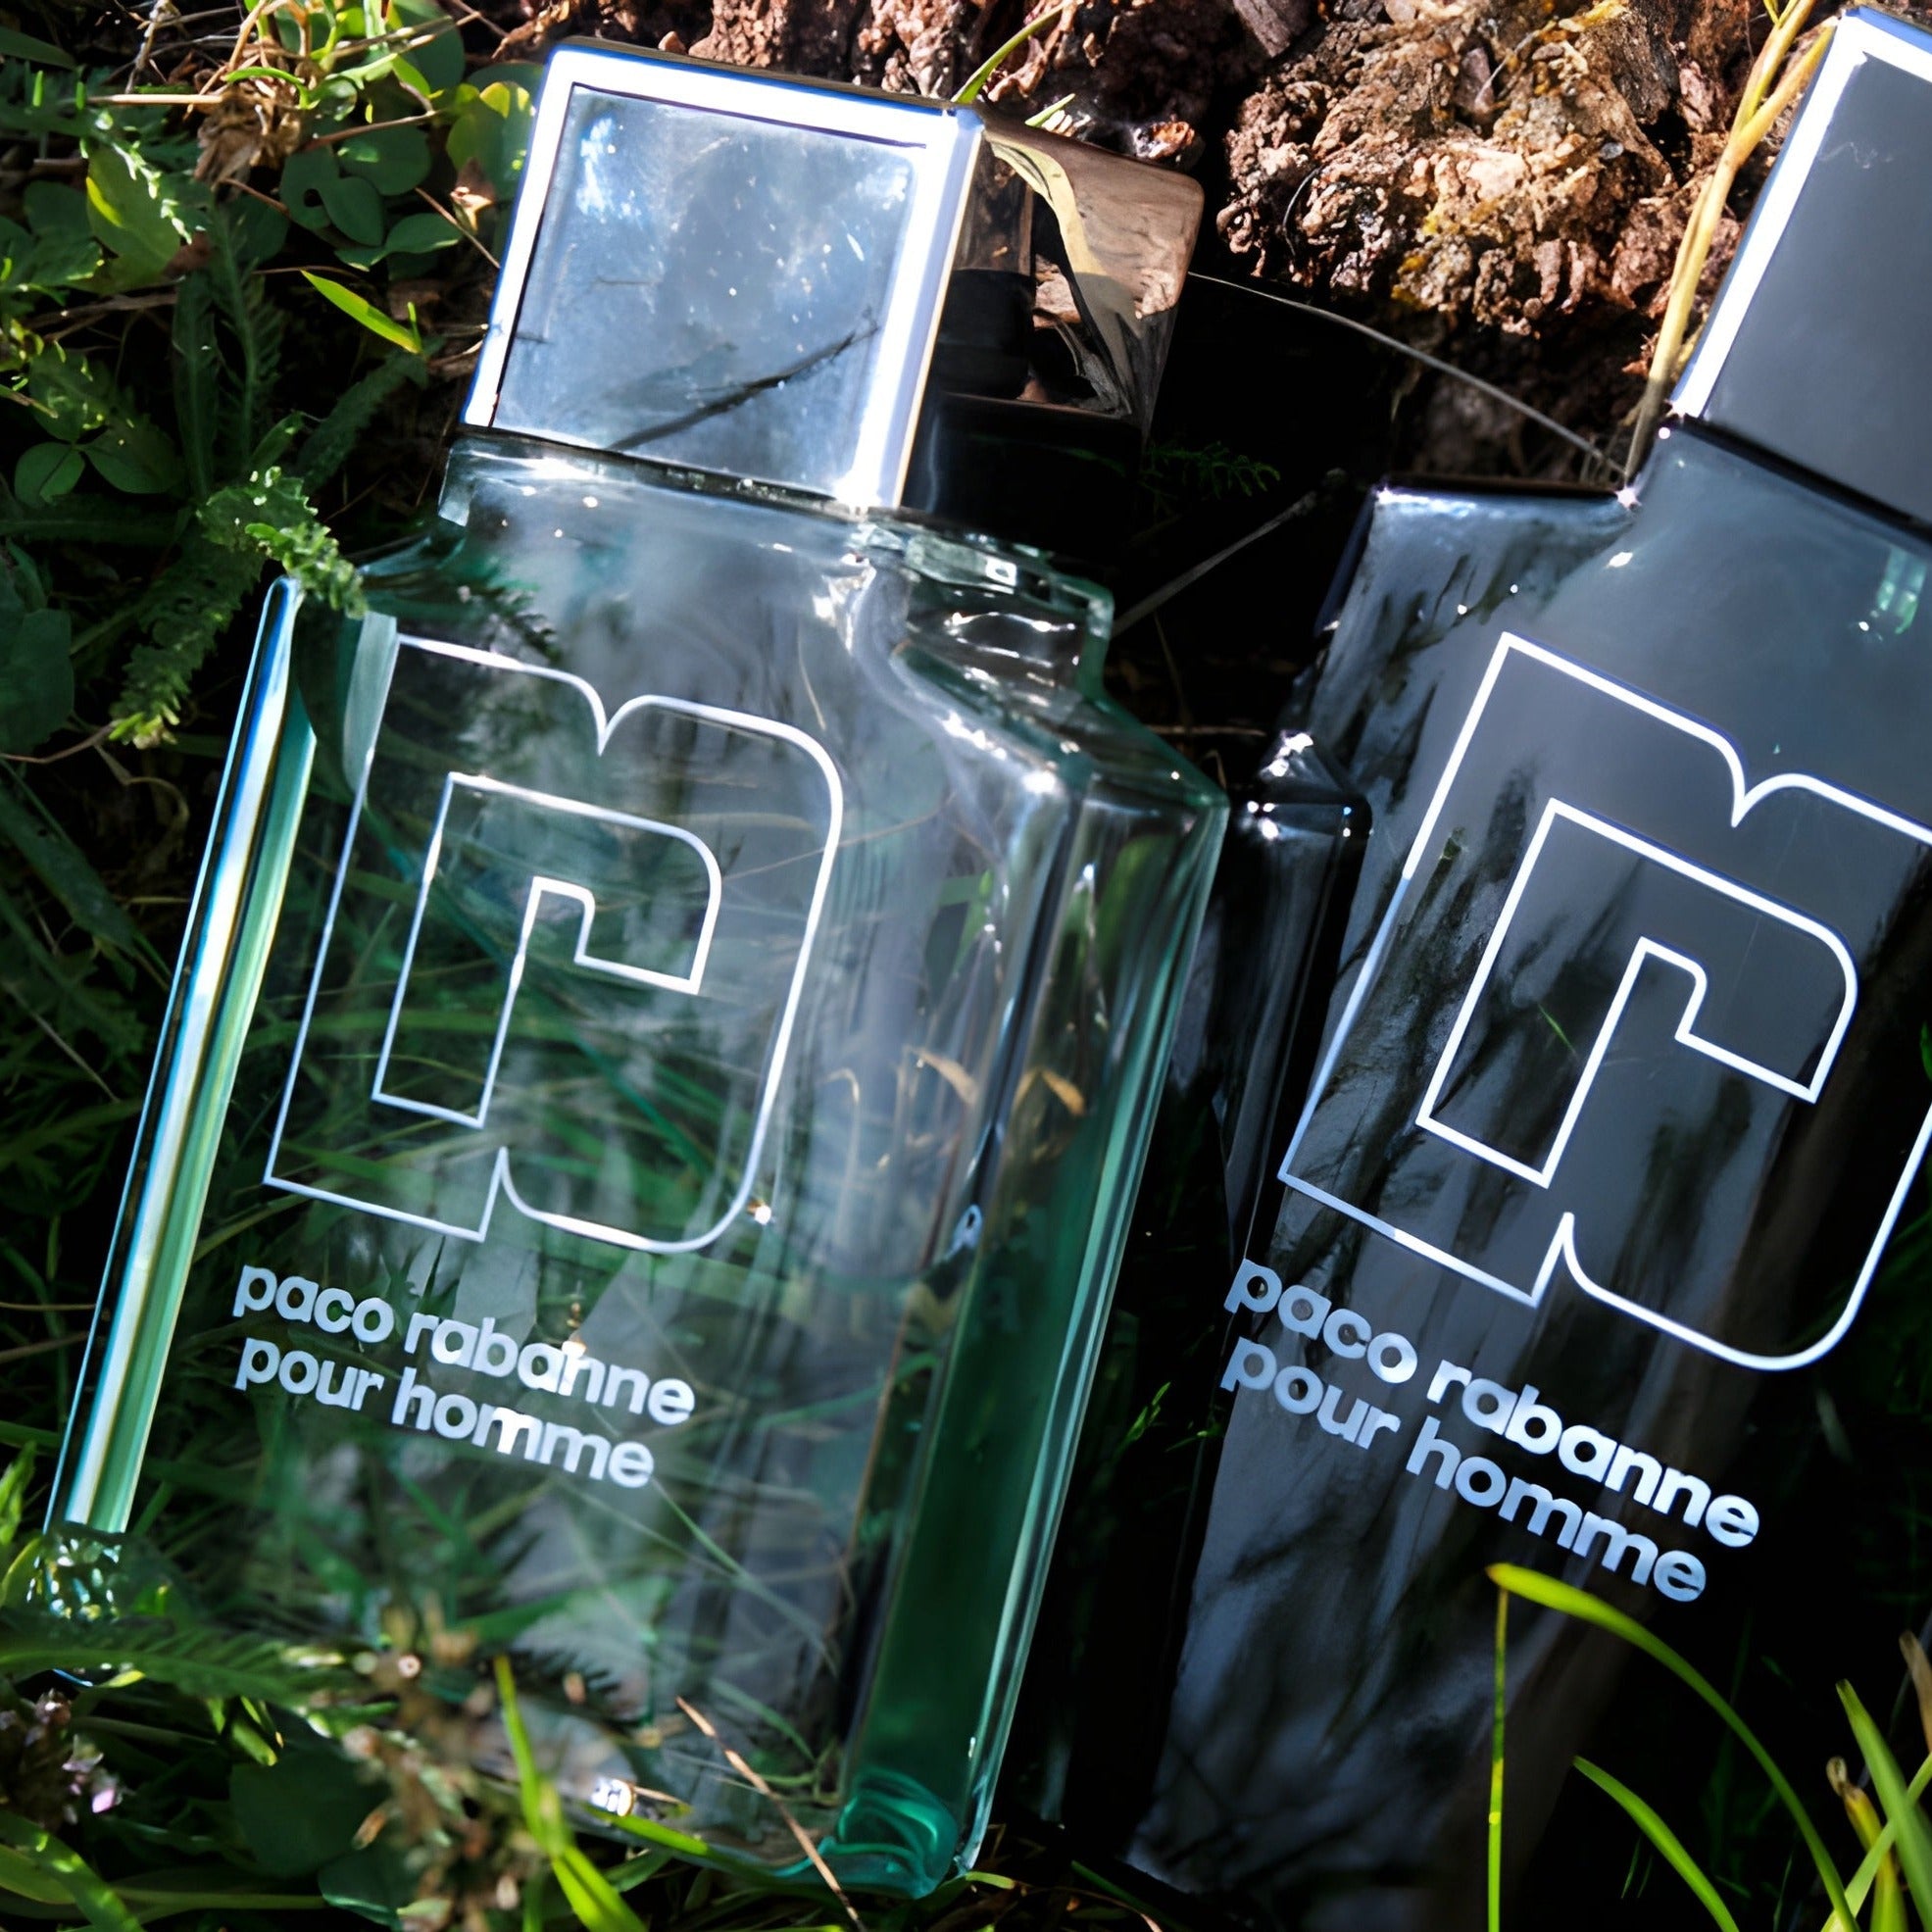 Paco Rabanne Green EDT | My Perfume Shop Australia